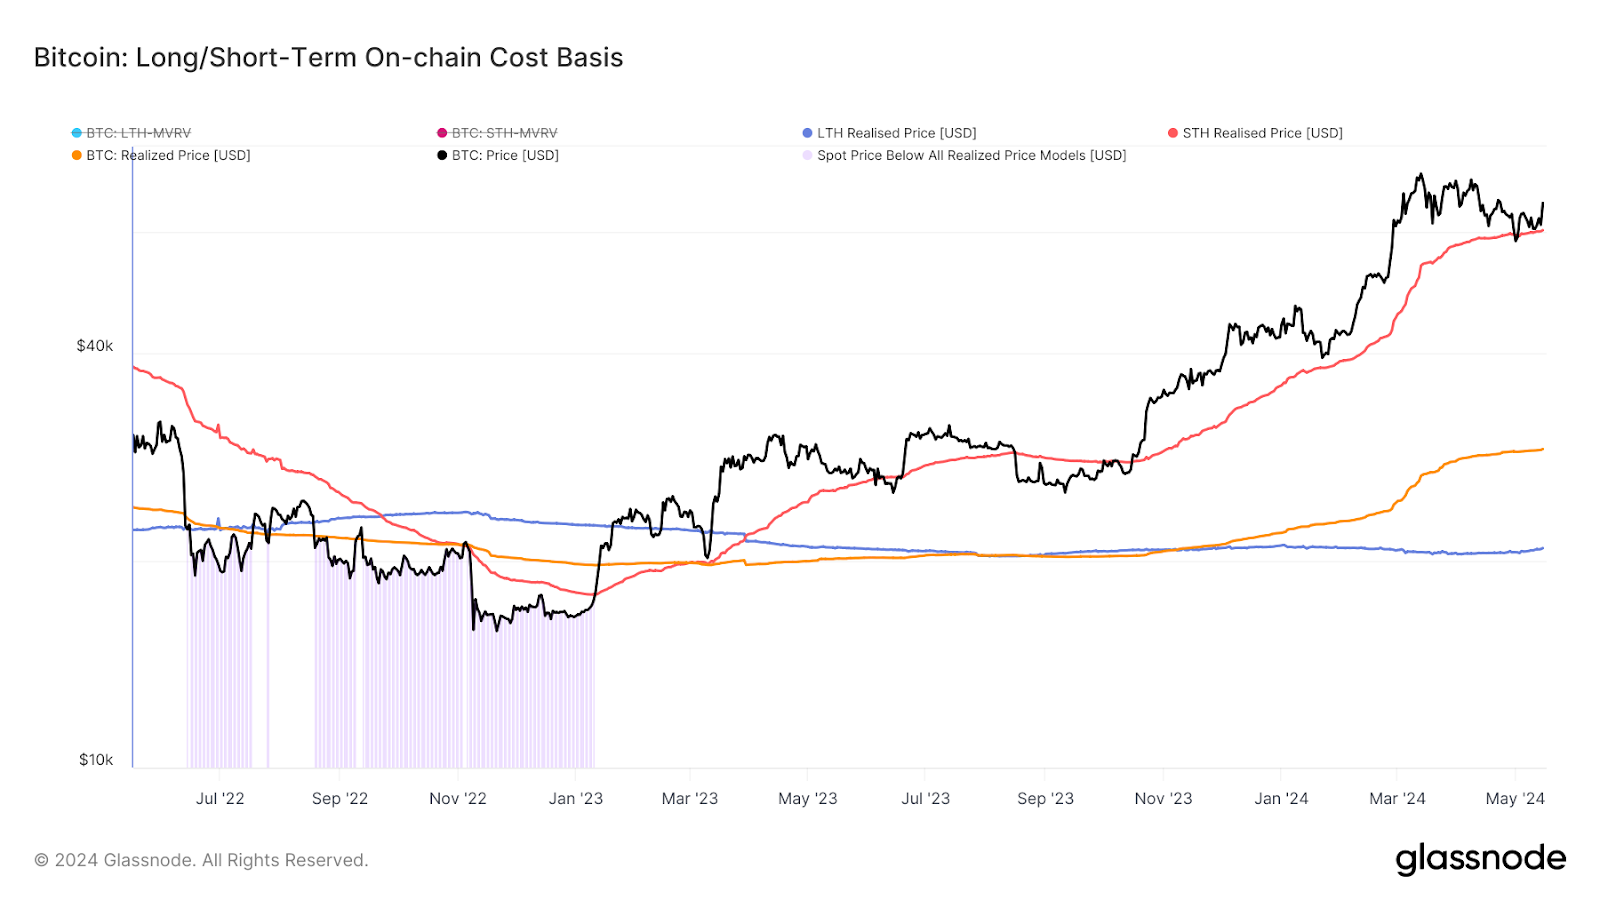 Bitcoin On-Chain Cost Basis